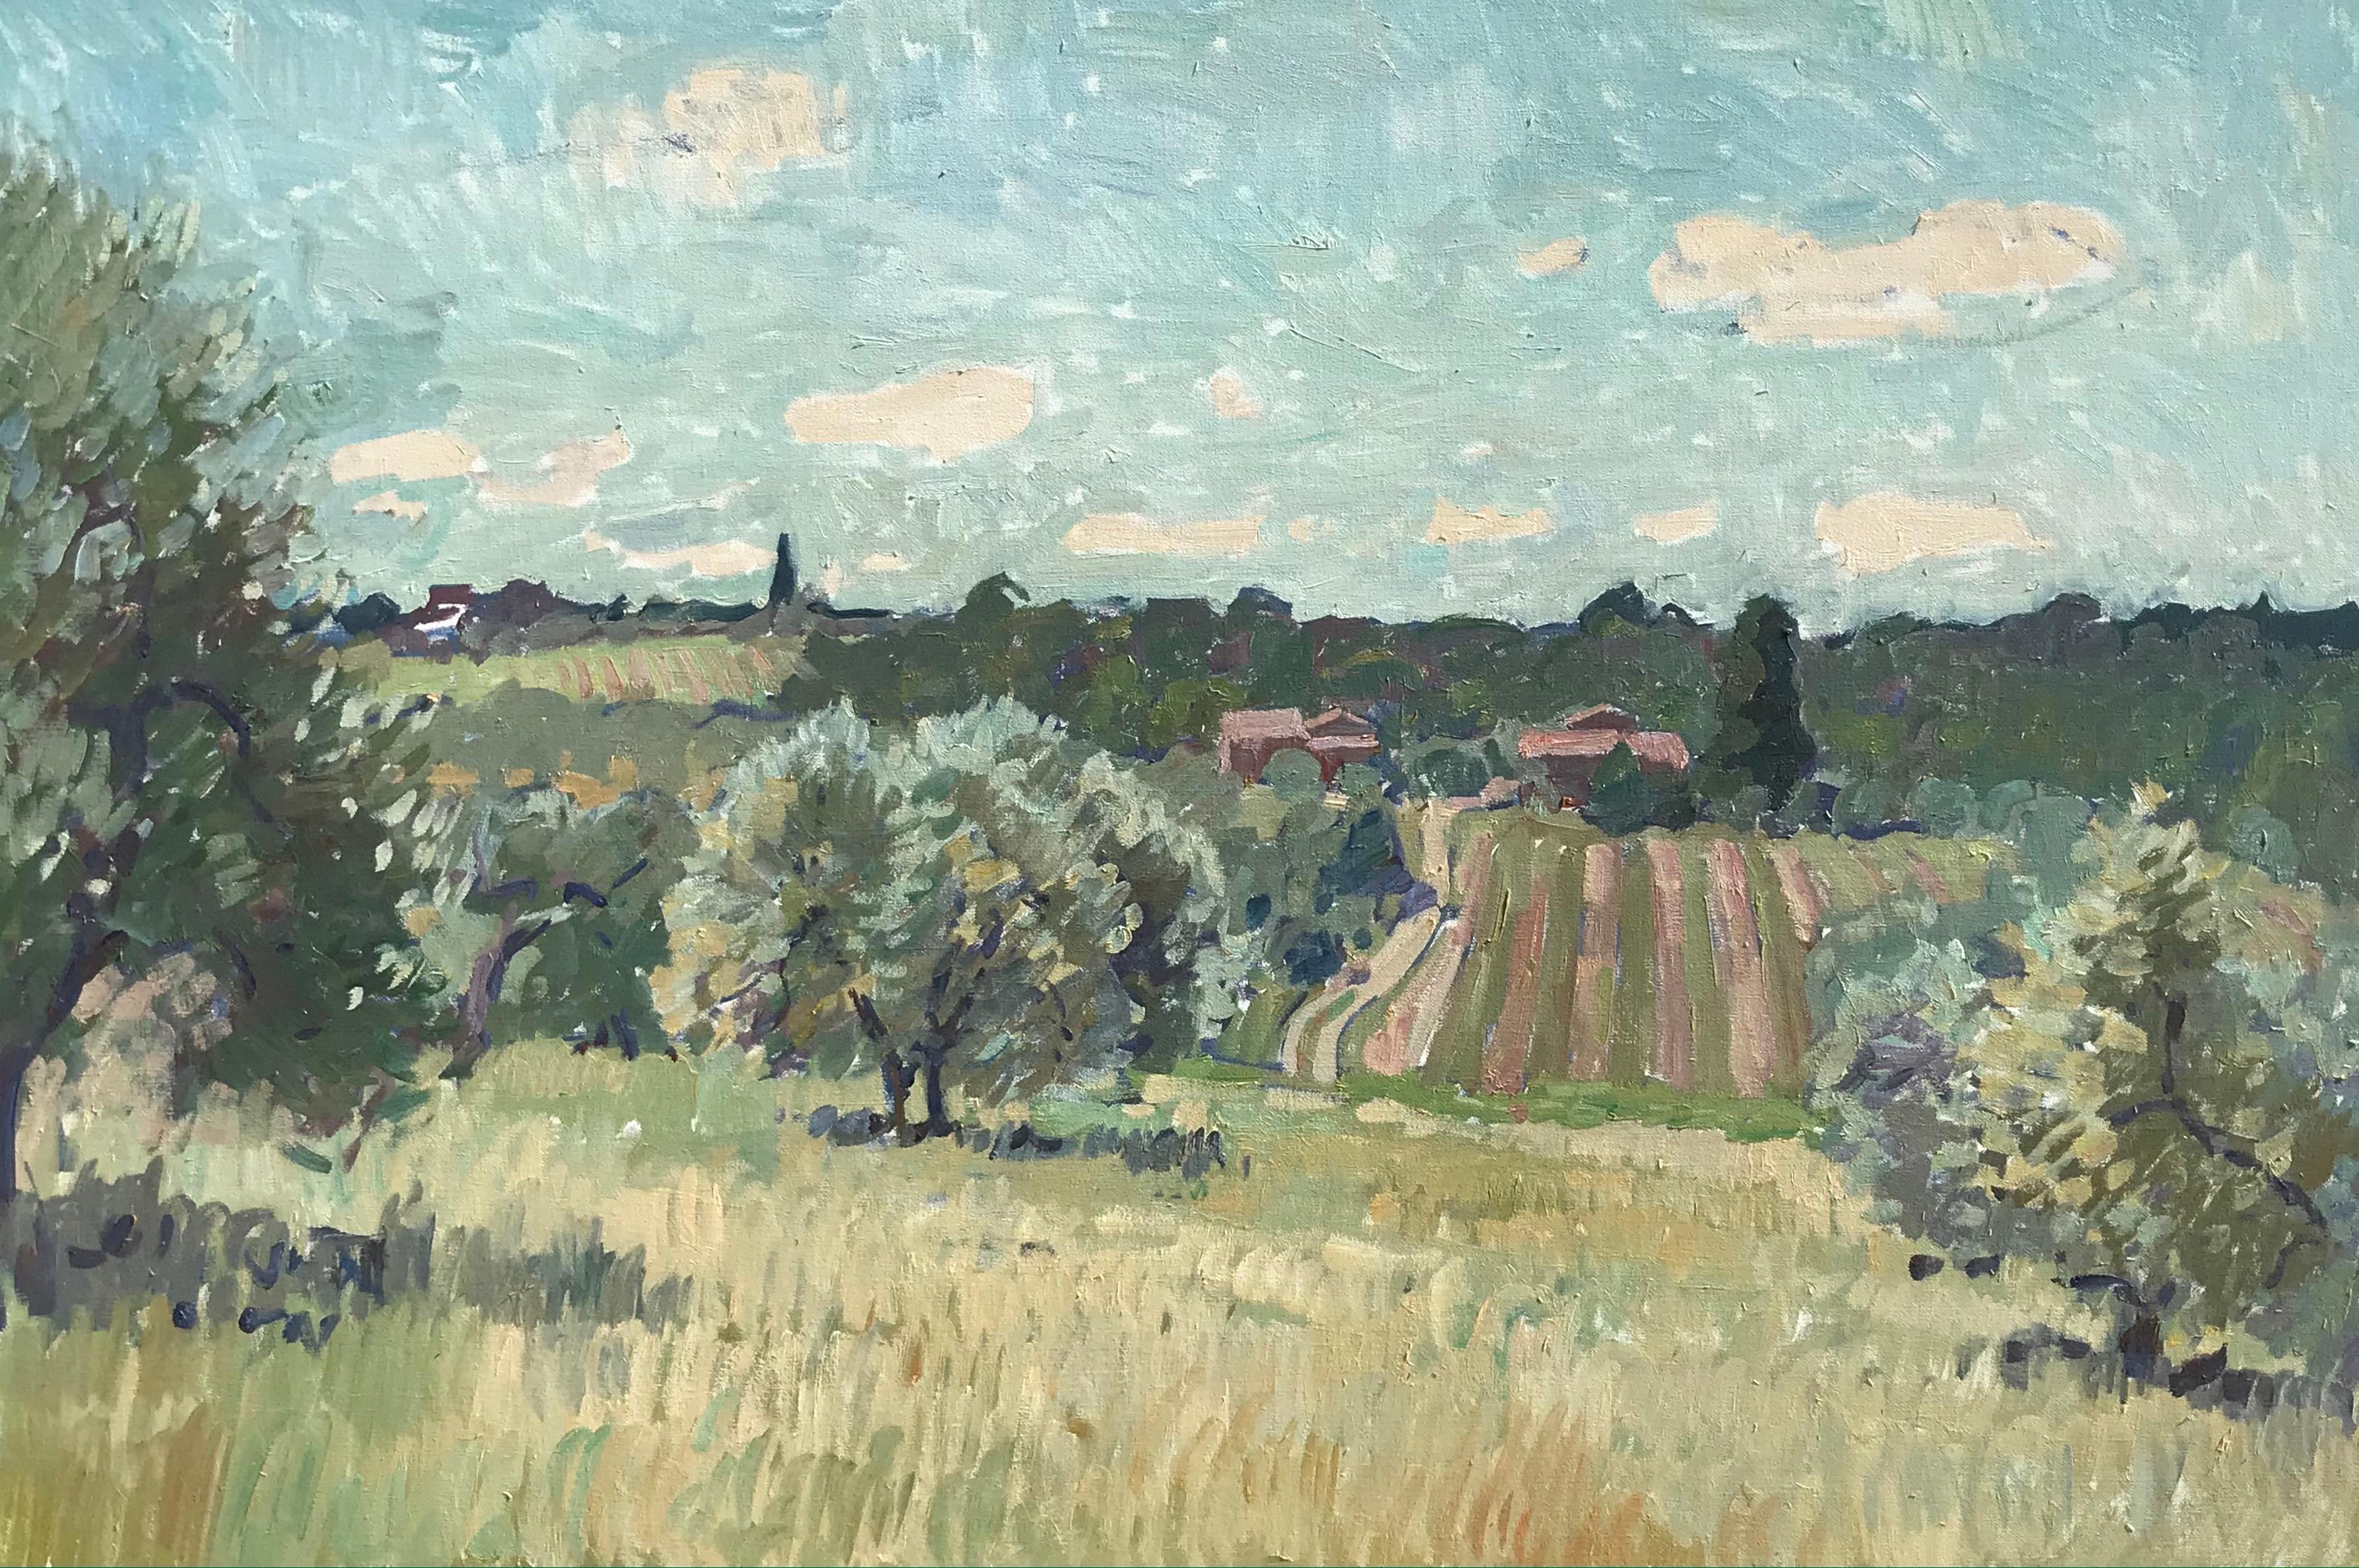 Landscape Painting Ben Fenske - vue impressionniste du paysage toscan au printemps